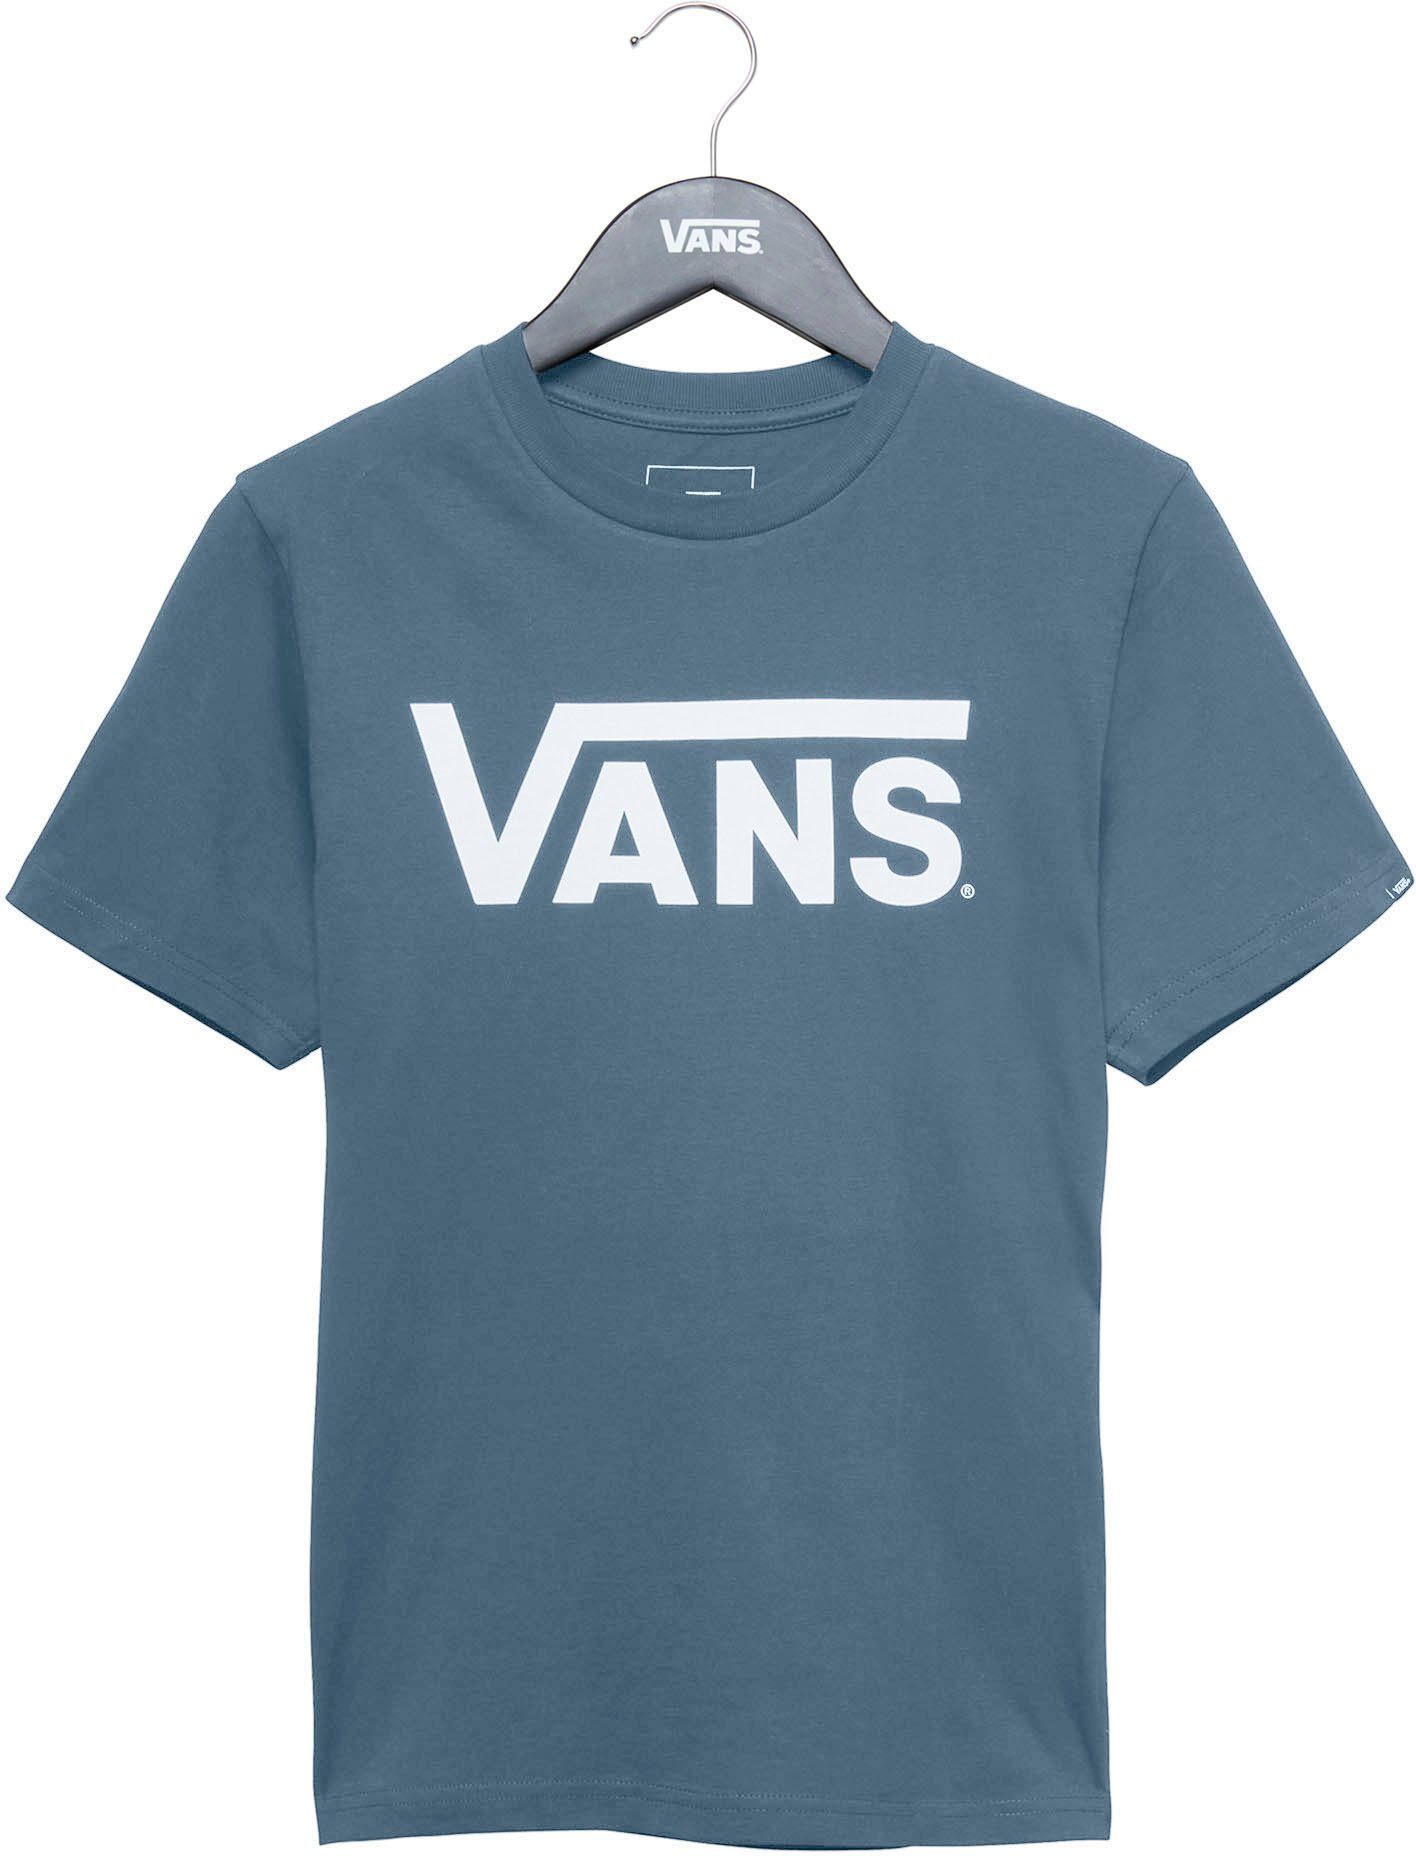 Vans T-Shirt VANS CLASSIC blau KIDS